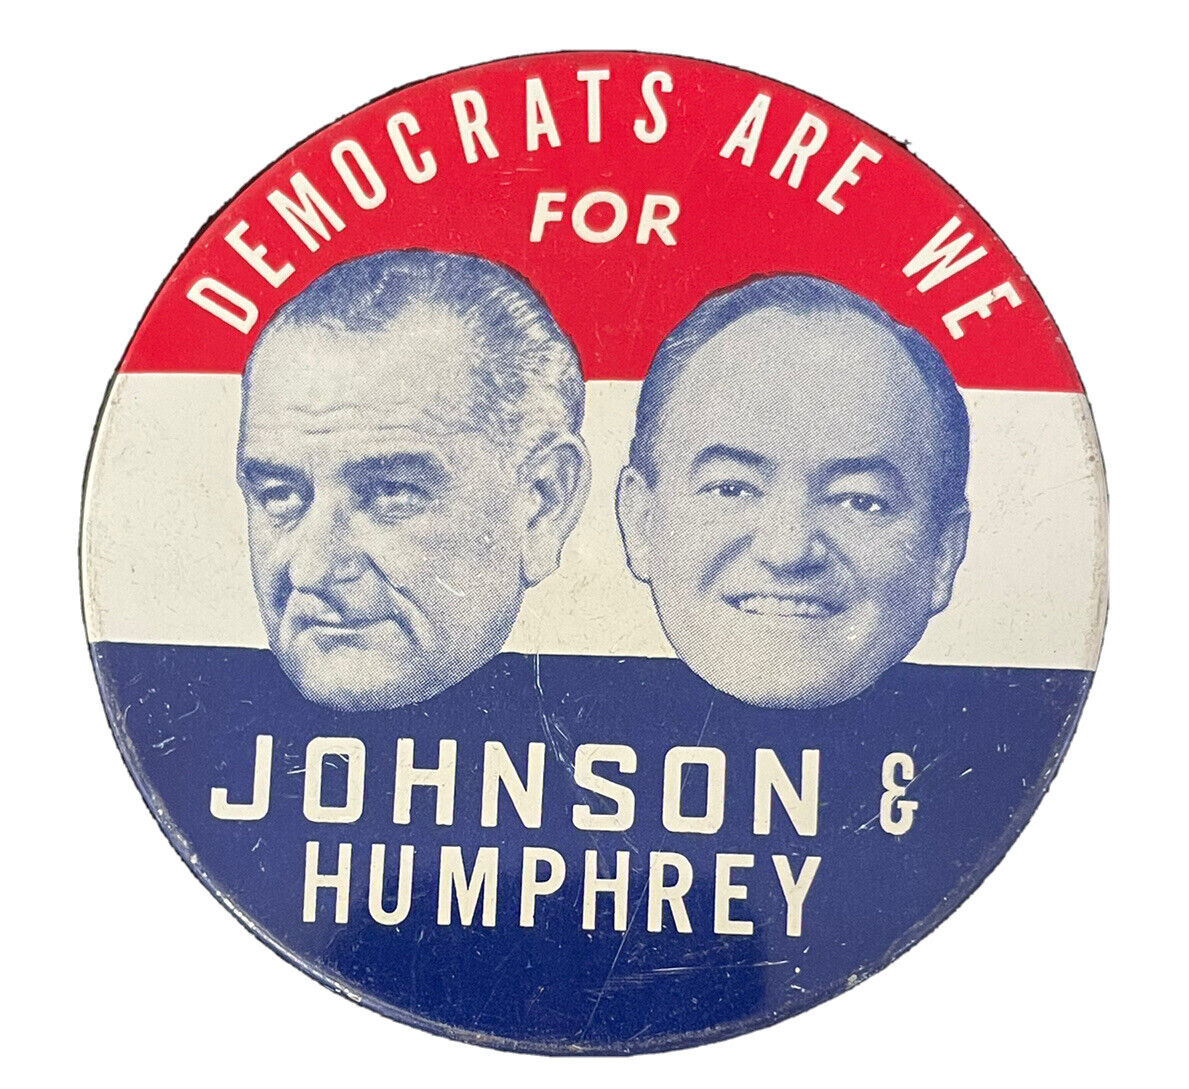 Johnson & Humphrey Pin LBJ HHH 1964 Democrats for Button Metal Litho 74mm 2-7/8